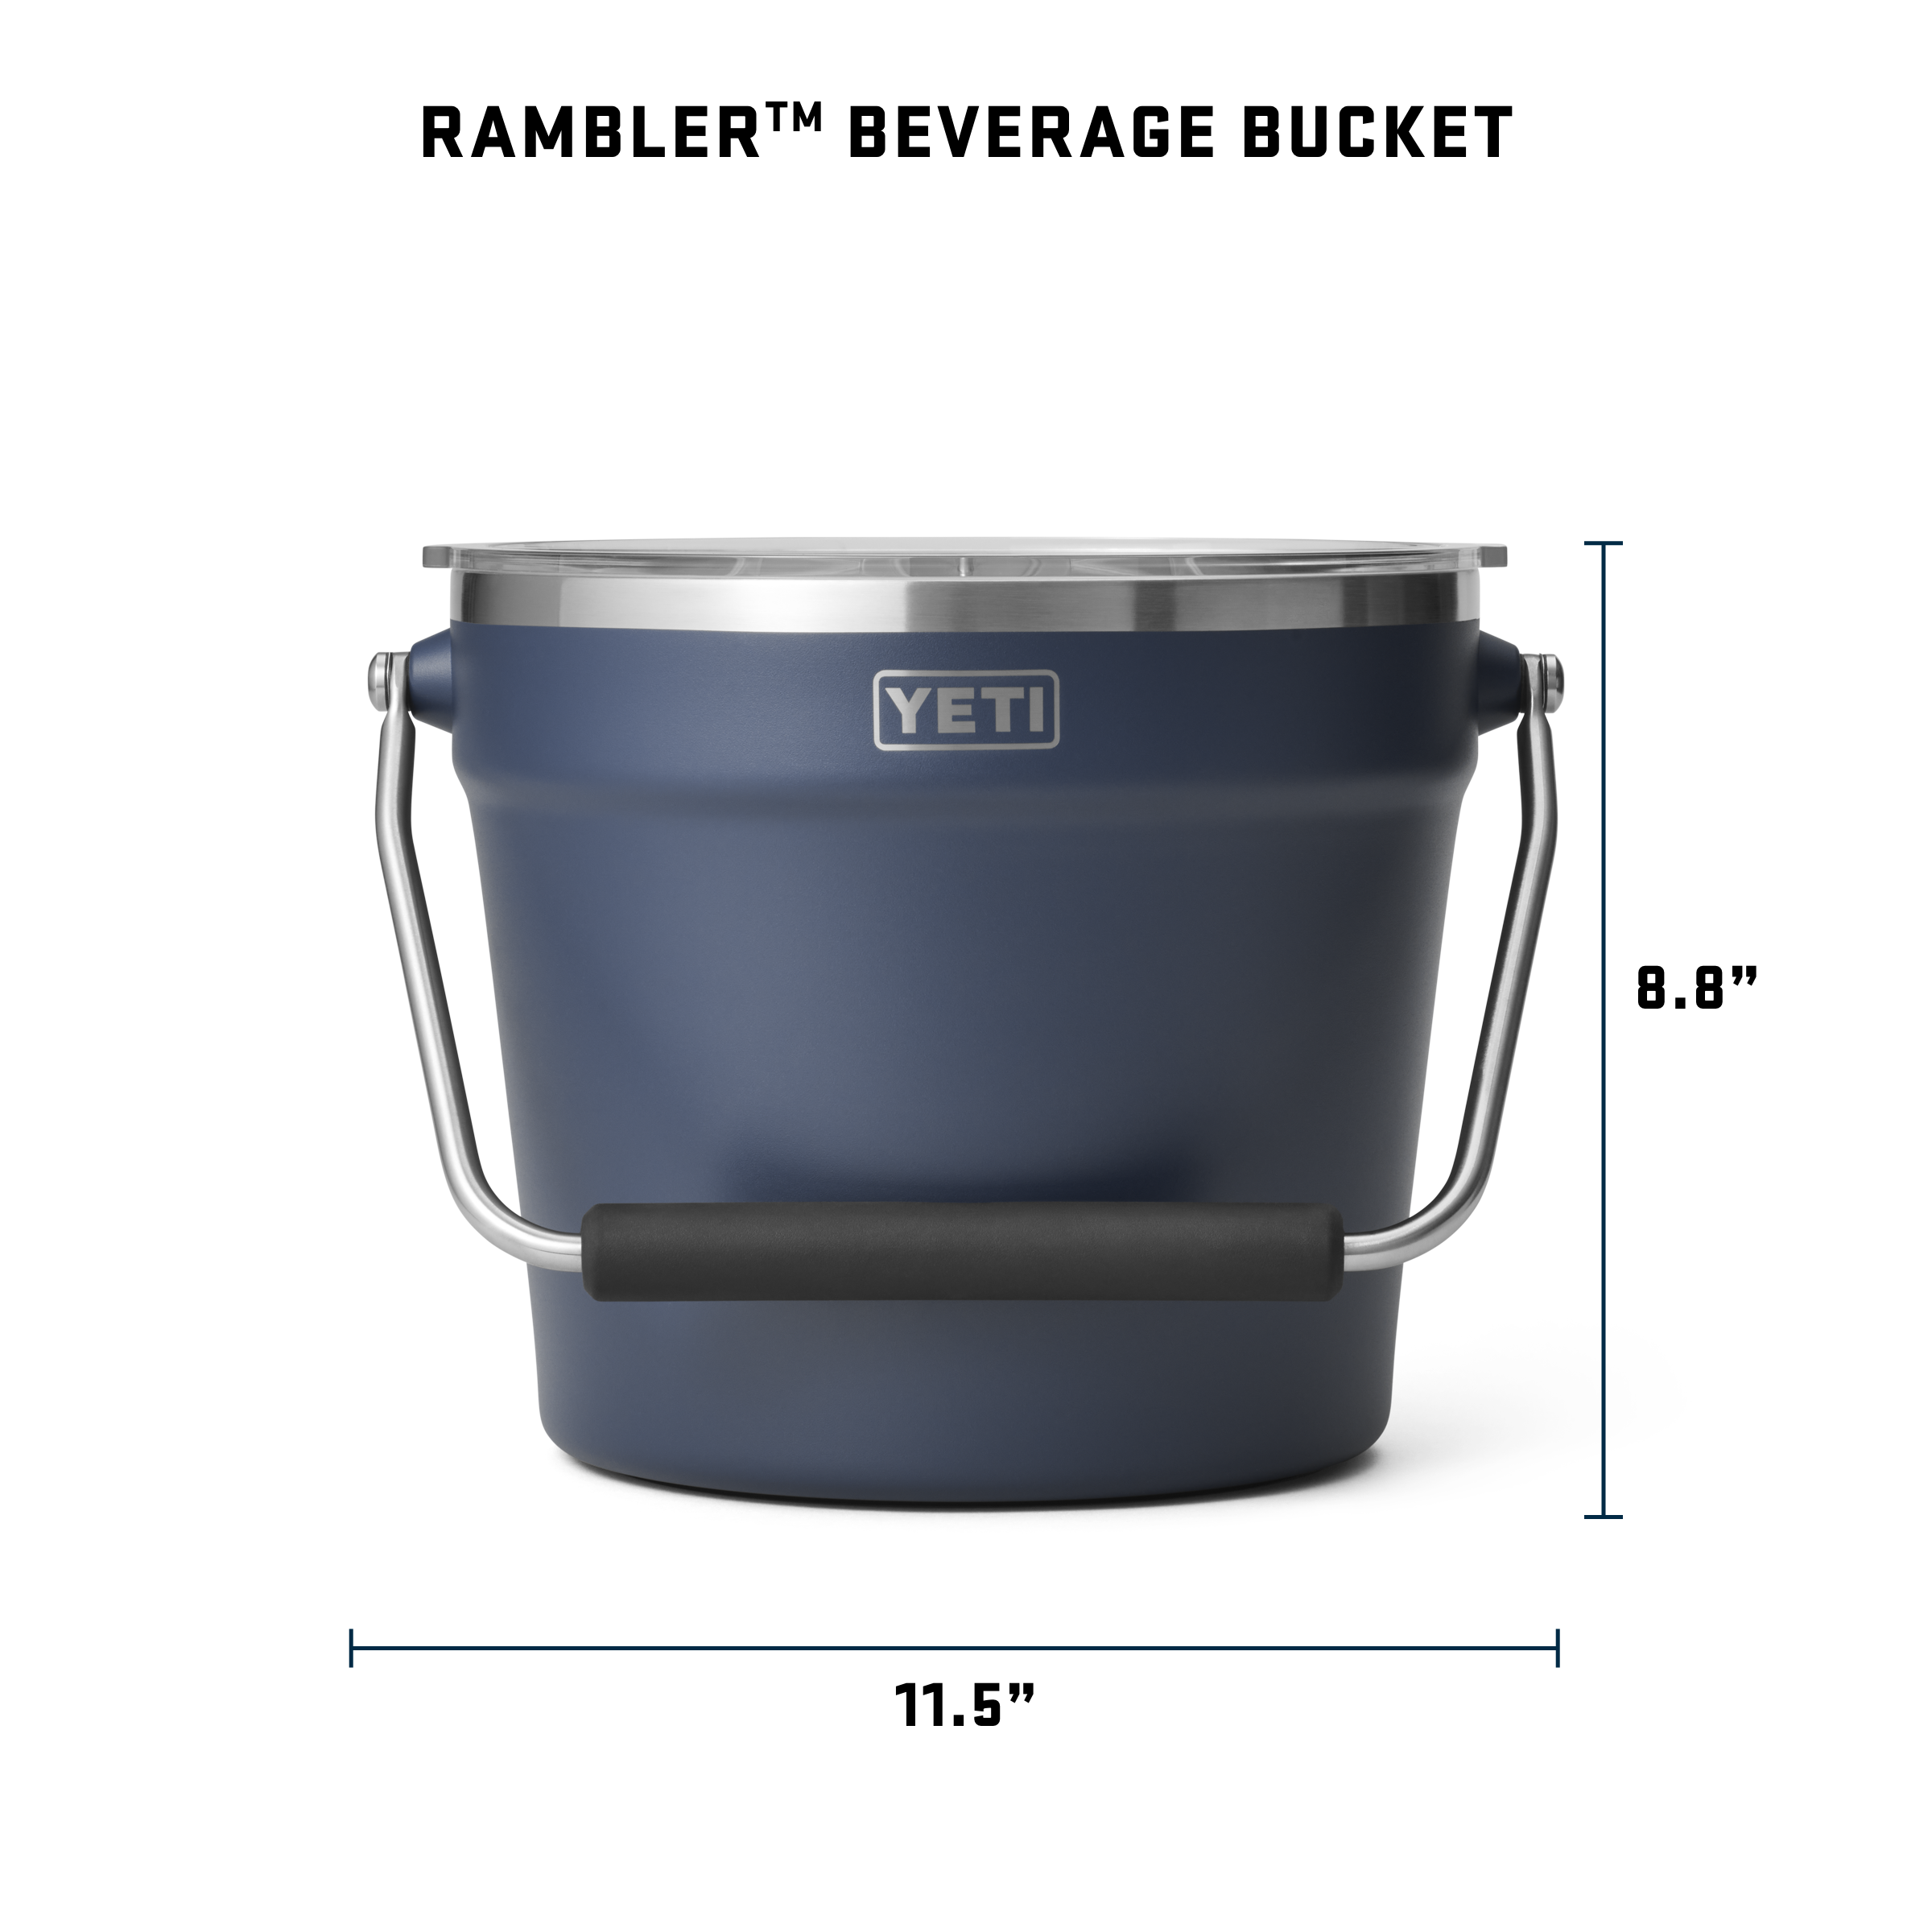 Yeti Rambler Beverage Bucket